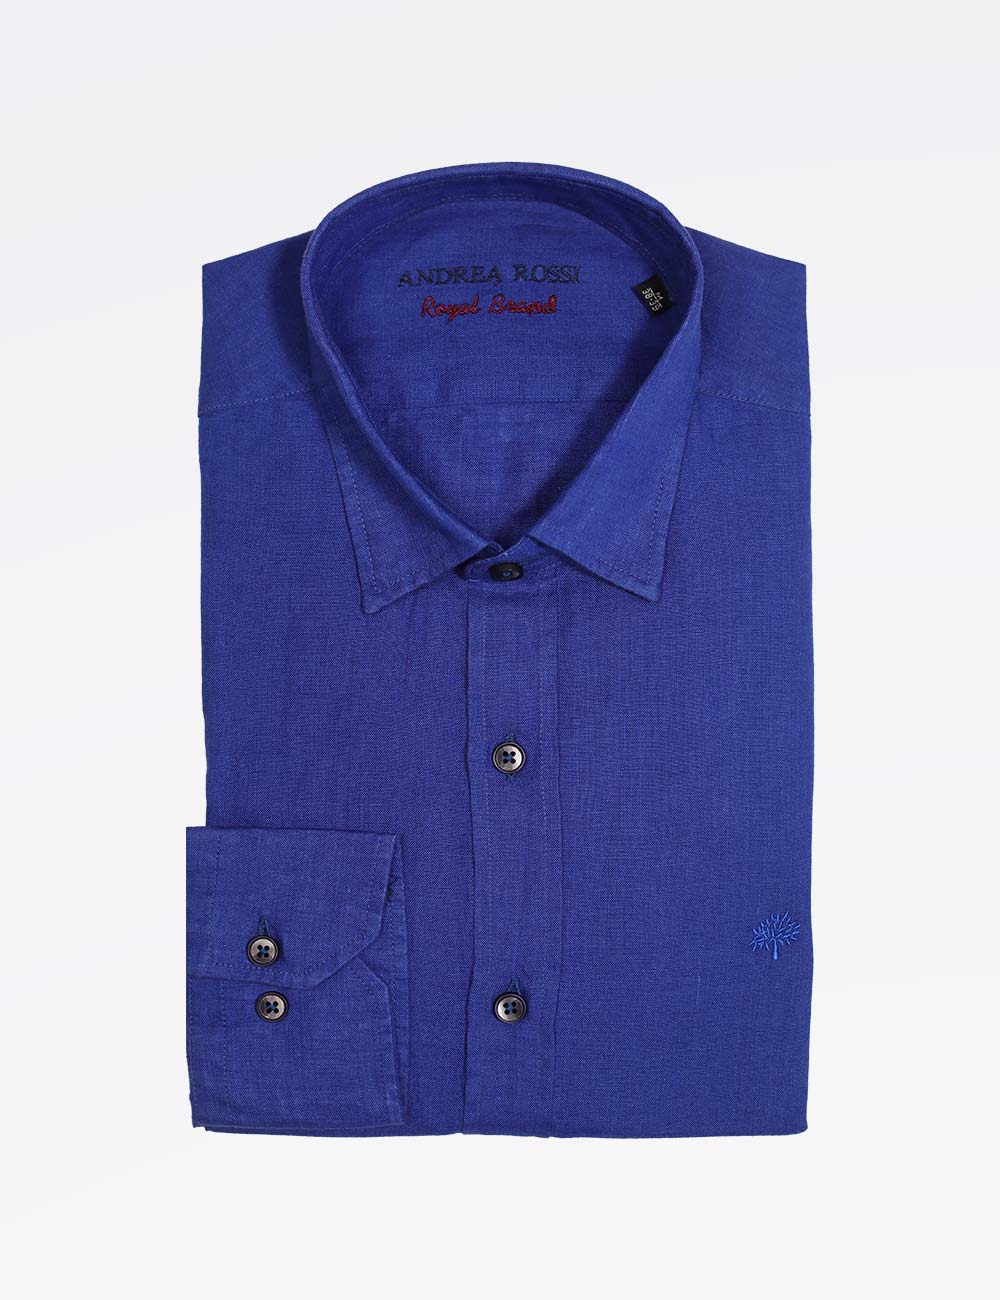 Abdrea Rossi Gitane / Blue colored linen shirt